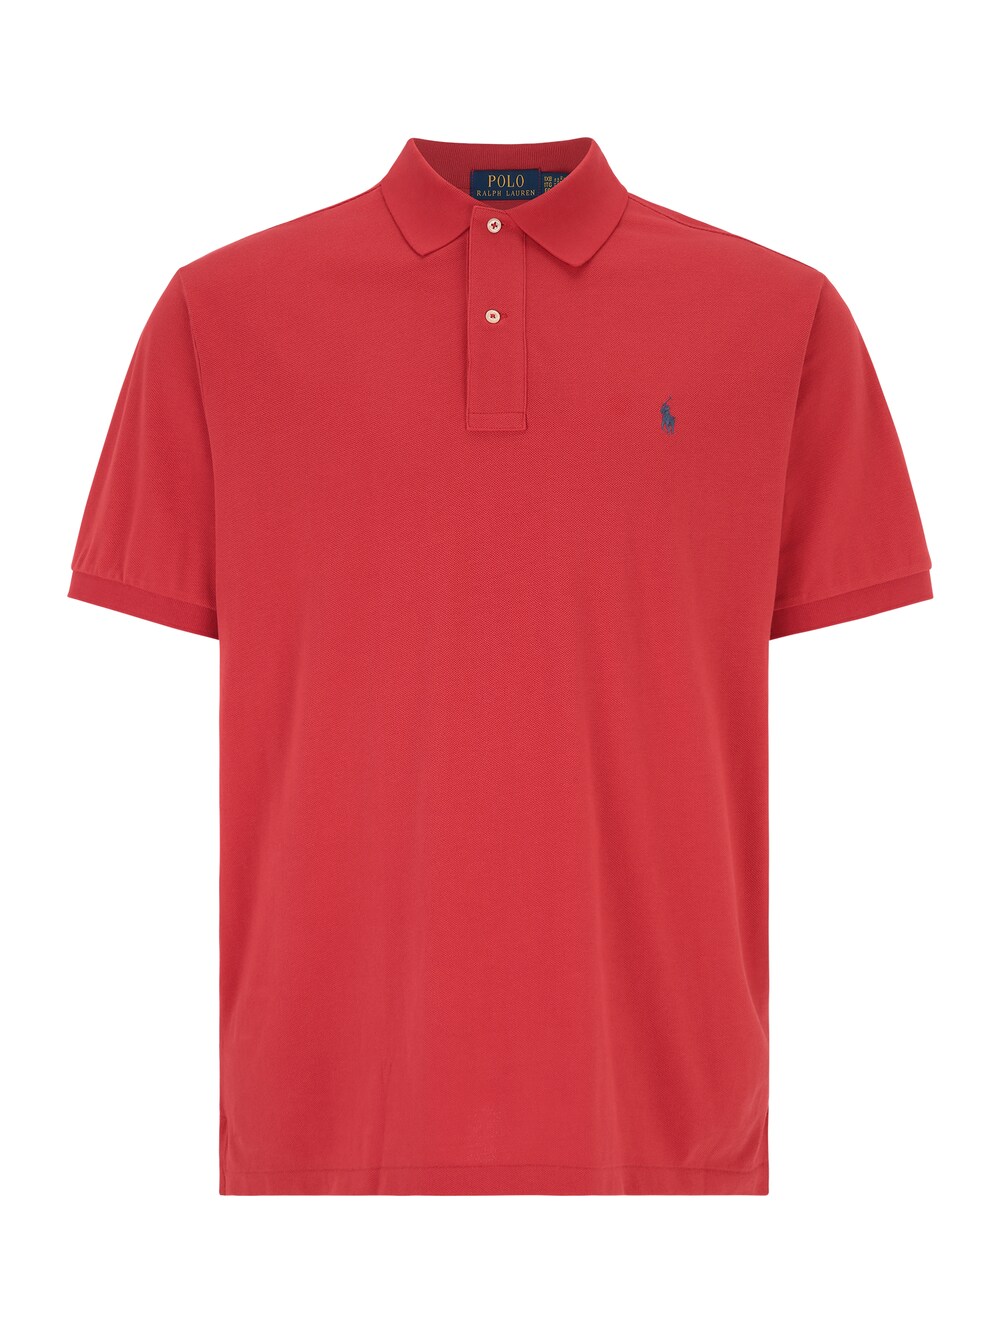 Футболка Polo Ralph Lauren Big & Tall, красный базовая футболка polo ralph lauren big